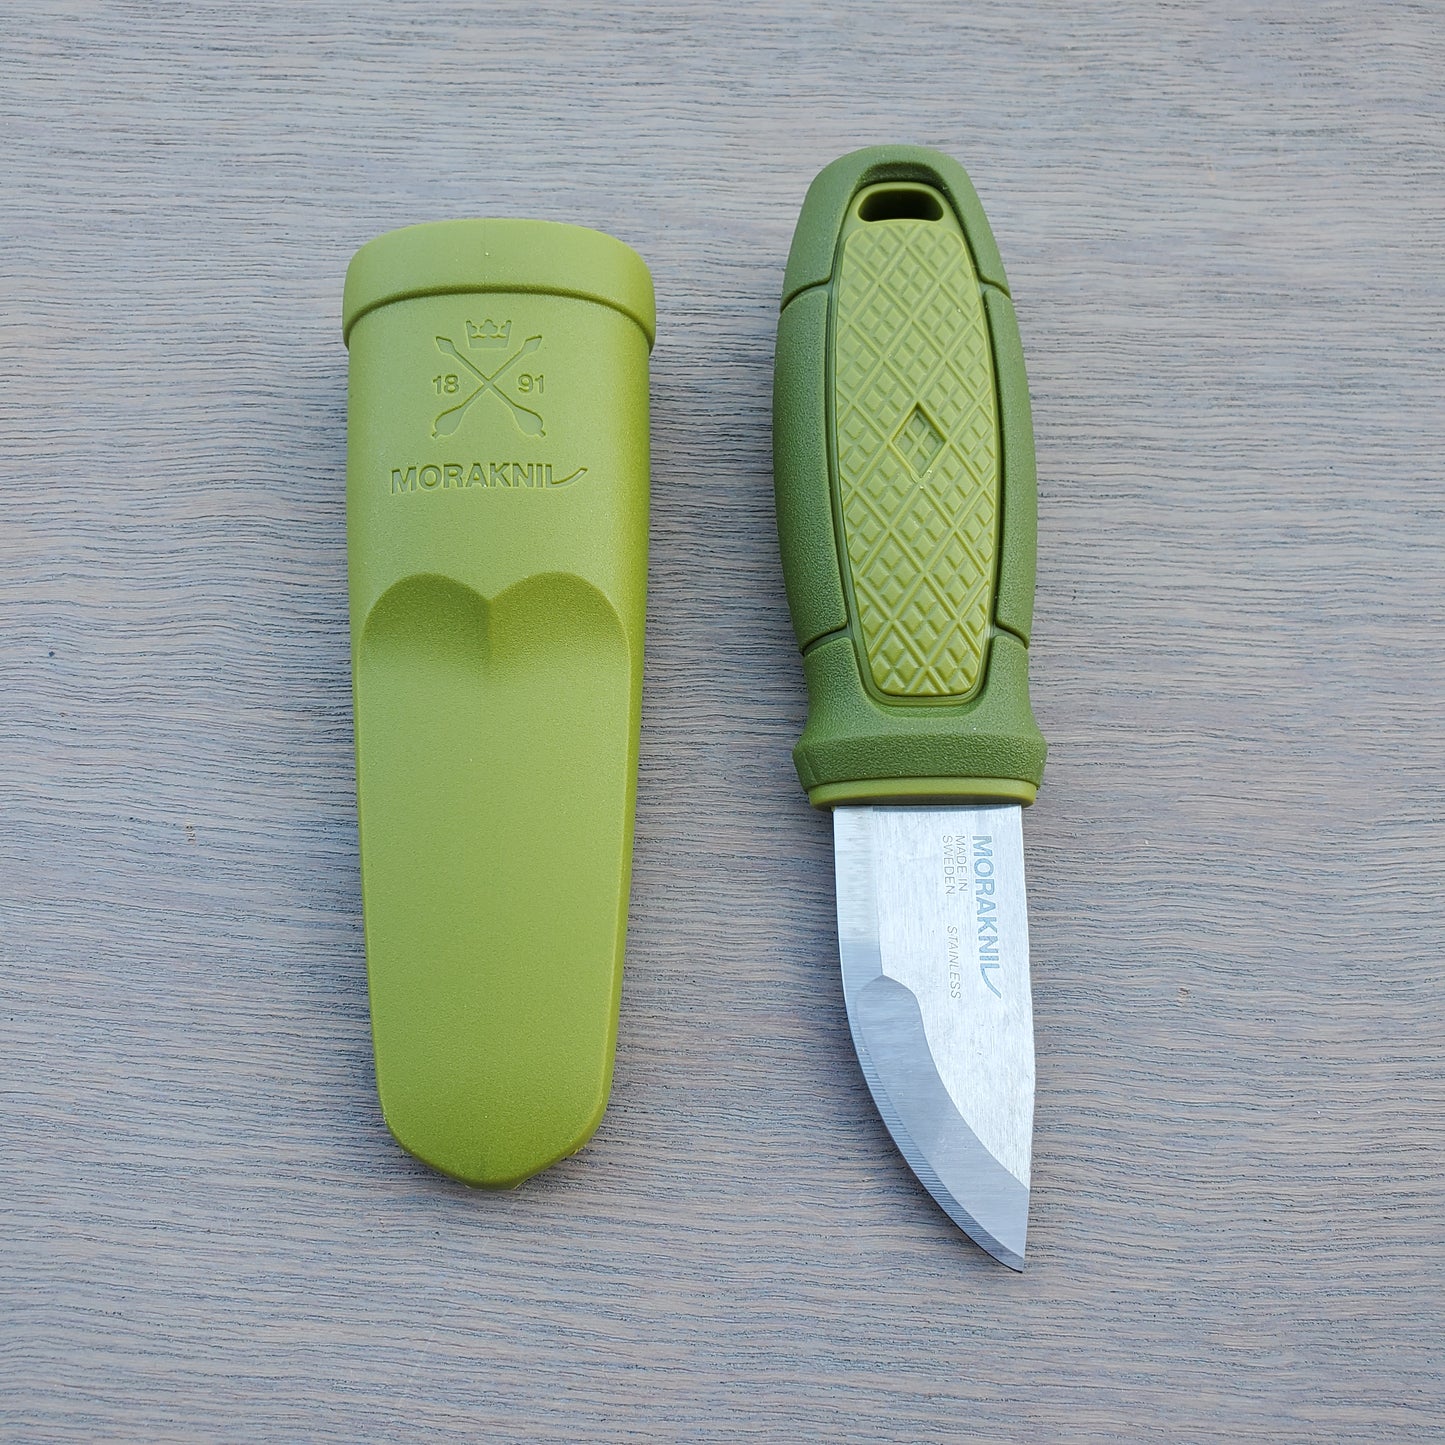 Morakniv Eldris the neck knife designed for survival